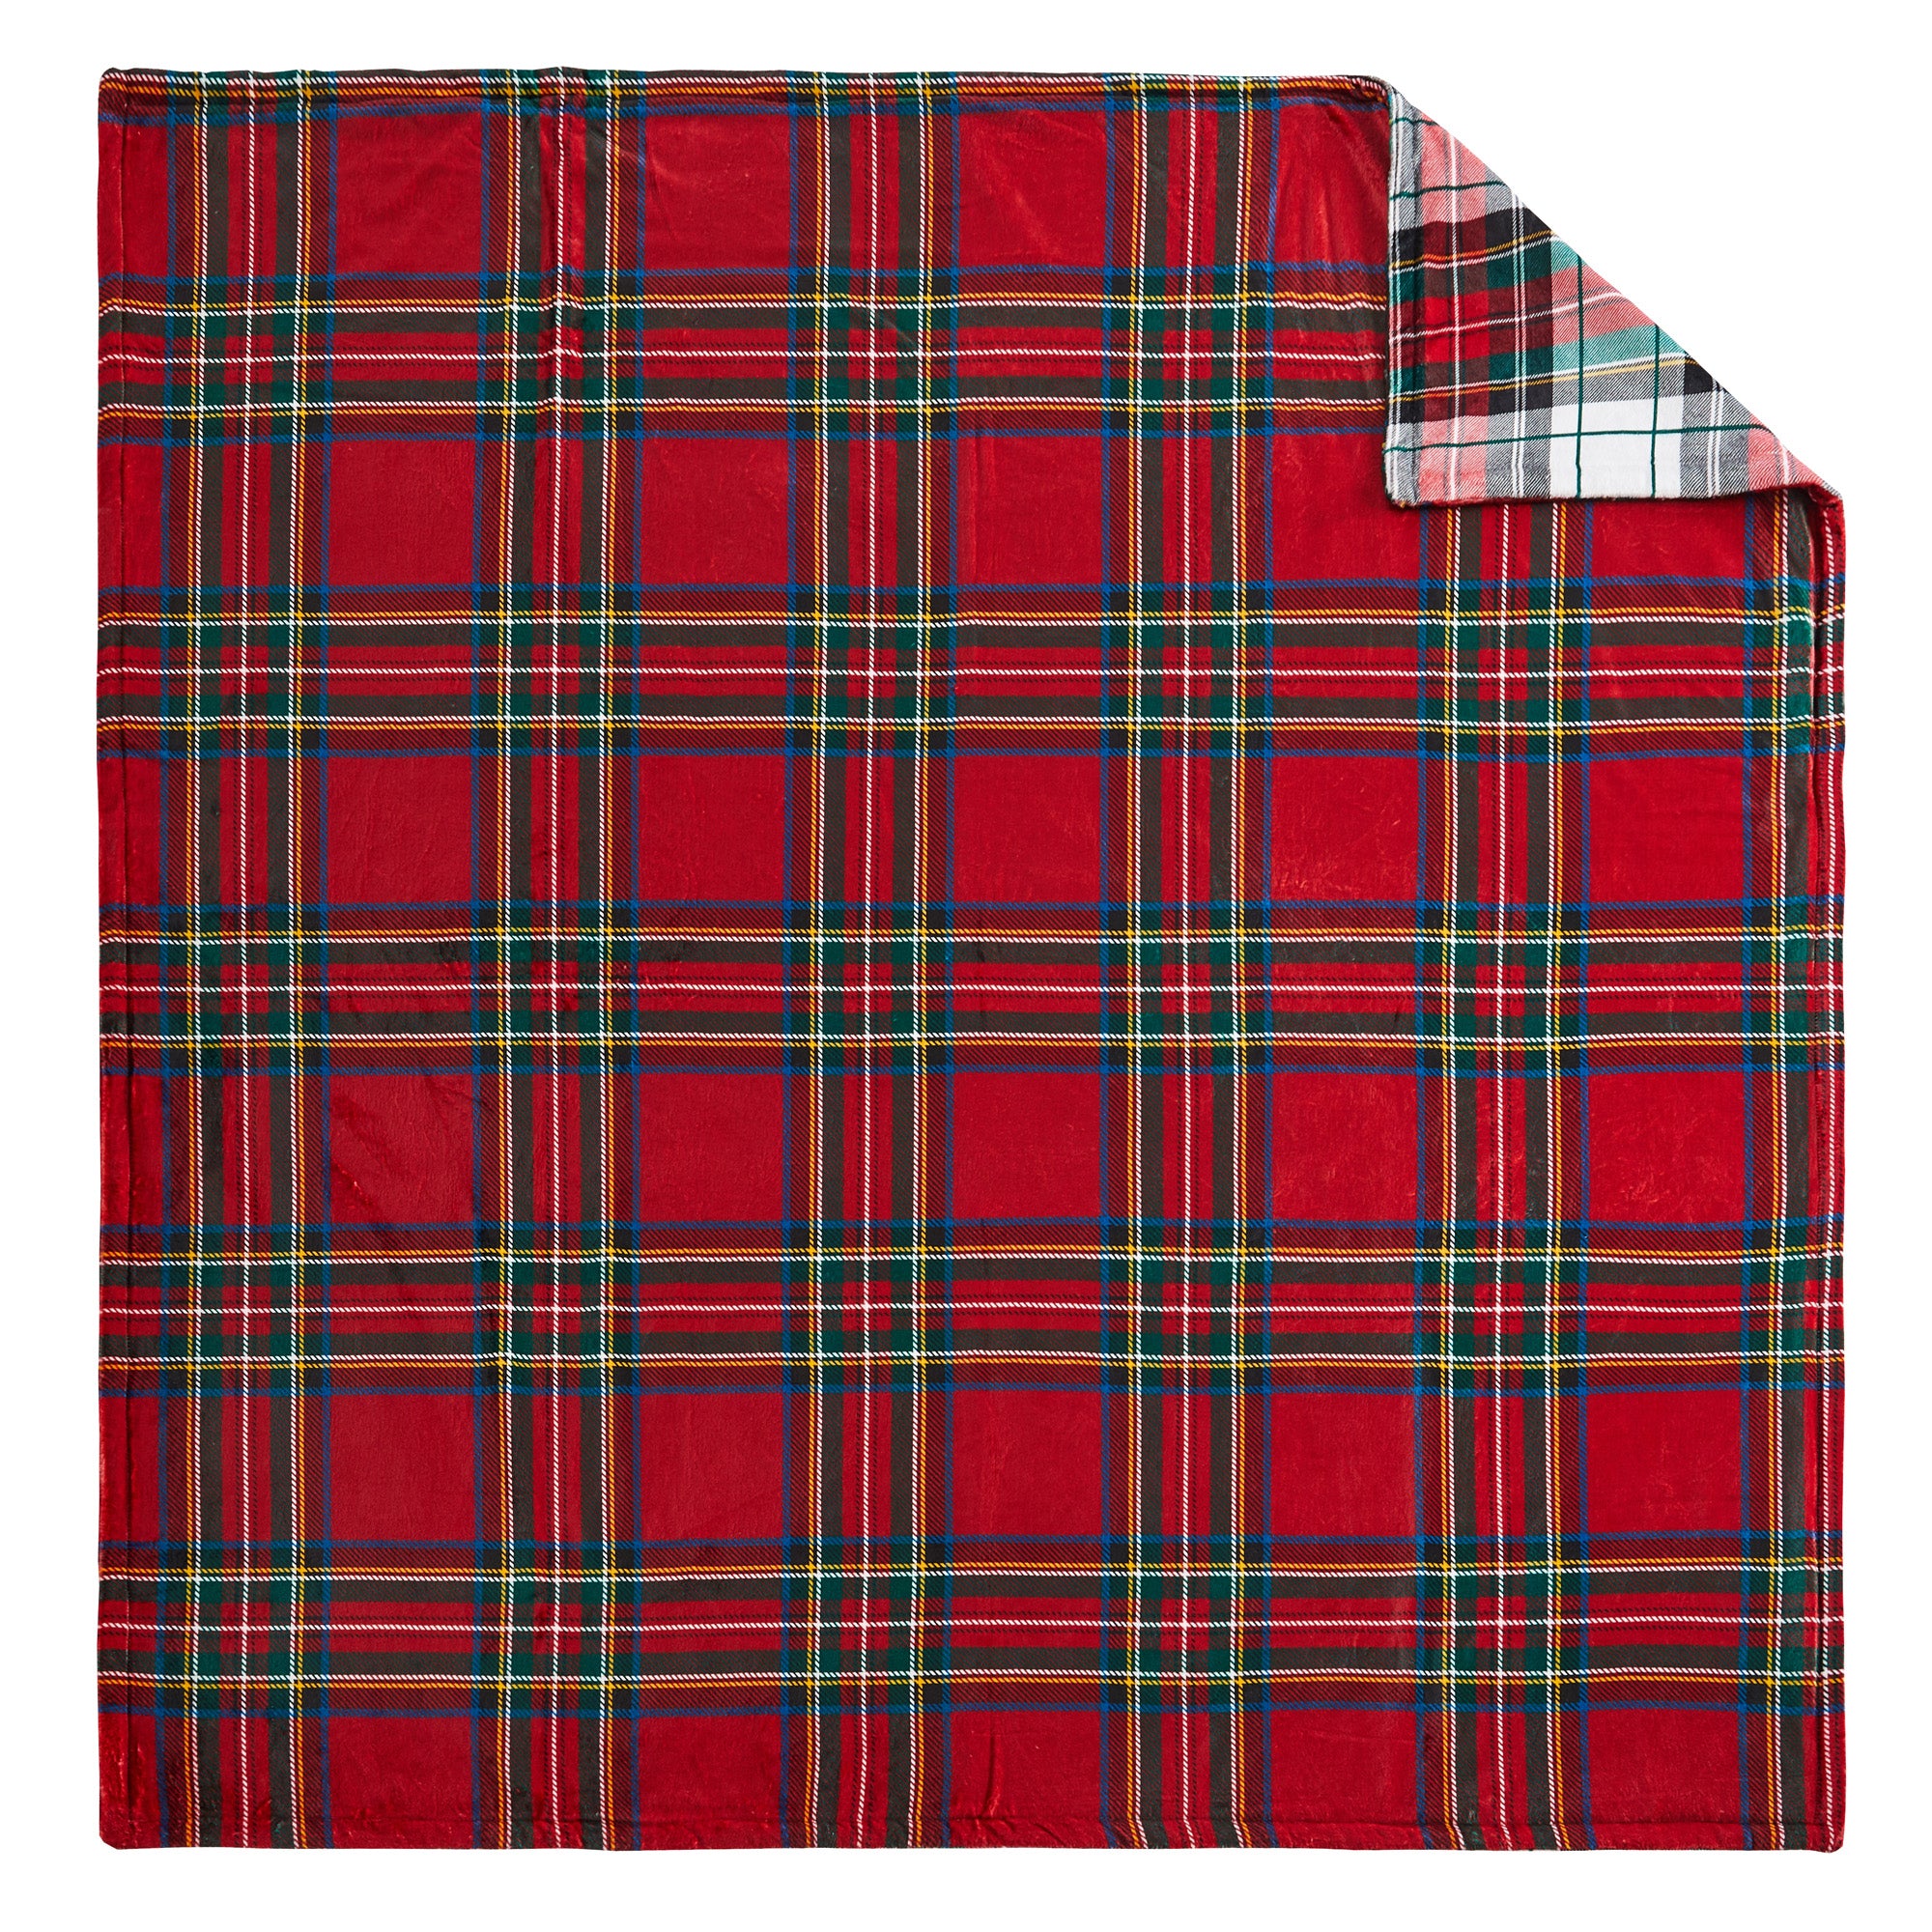 Spencer Plaid Reverse Blanket - Quilt Print